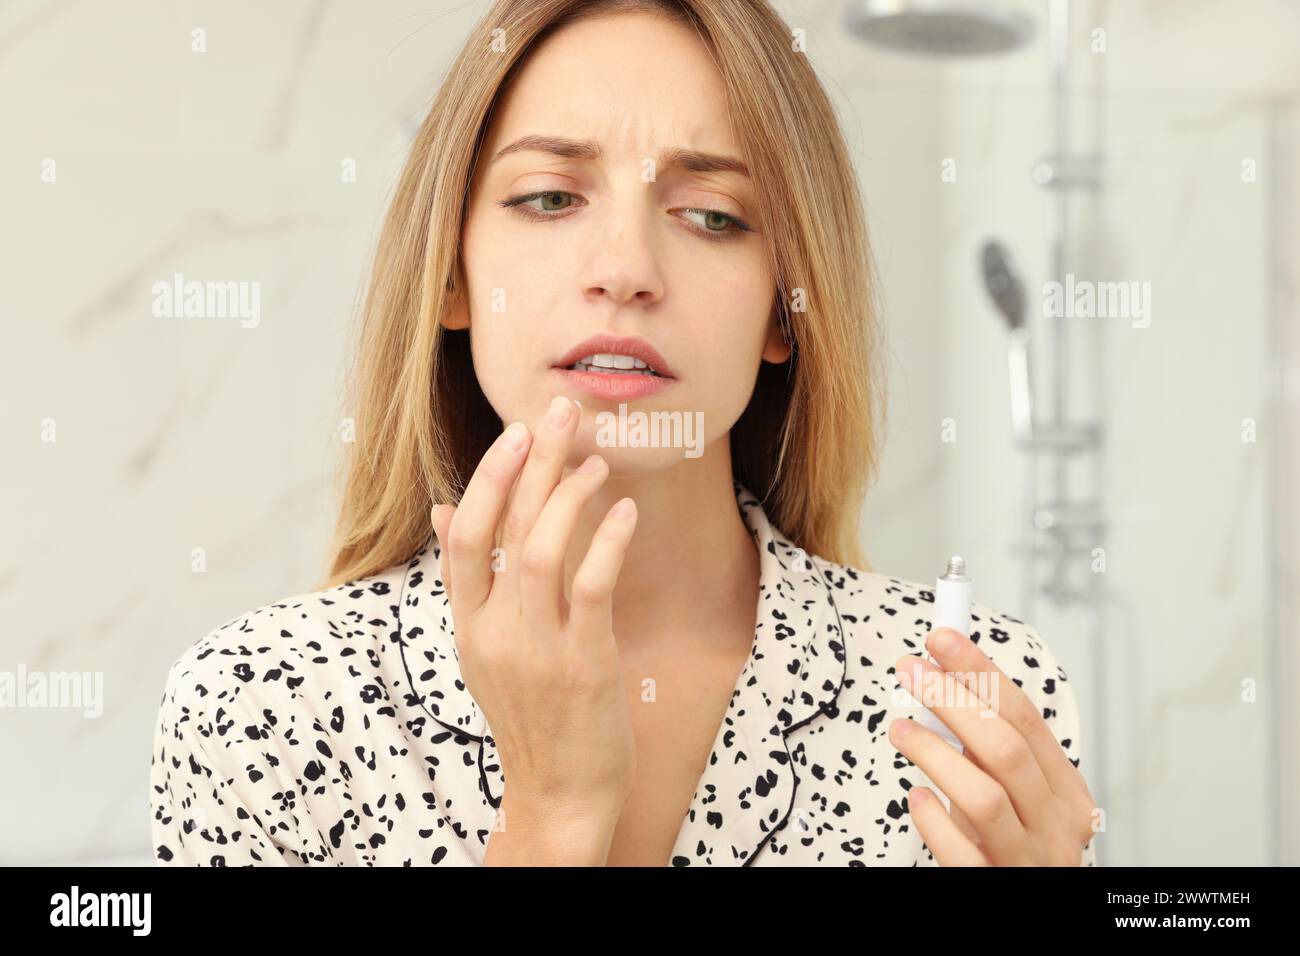 Woman with herpes applying cream onto lip in bathroom Stock Photo